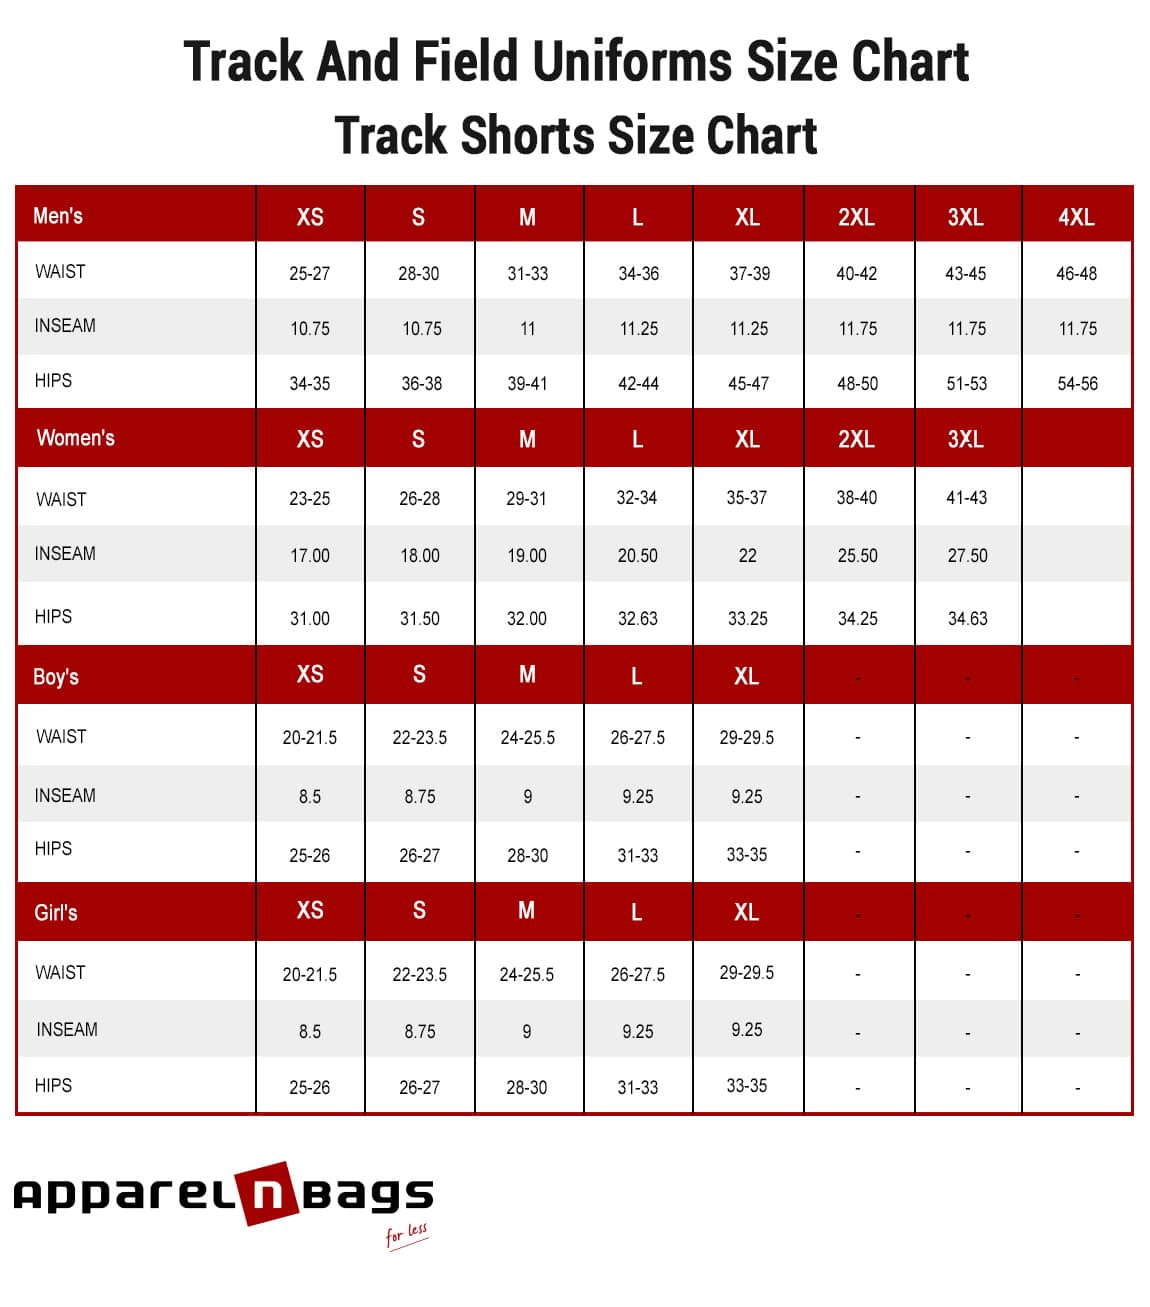 Track & Field Uniforms Size Chart | ApparelnBags.com